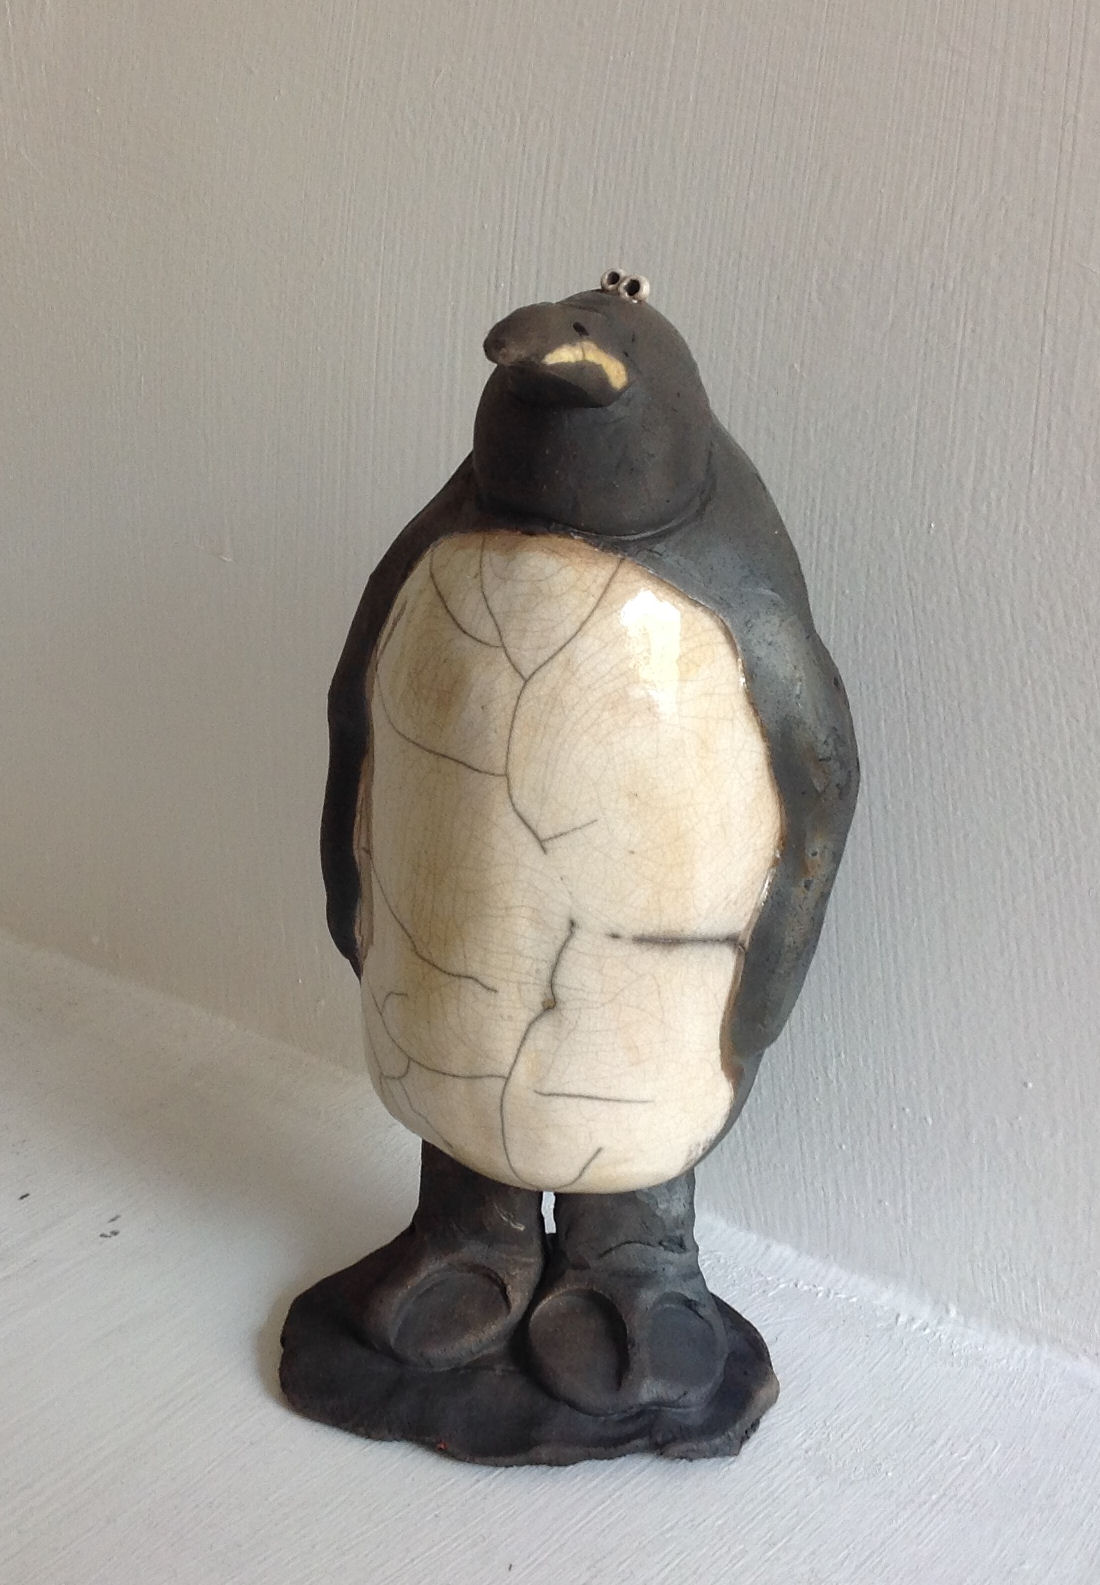 'Penguin I' by artist Alex Johannsen